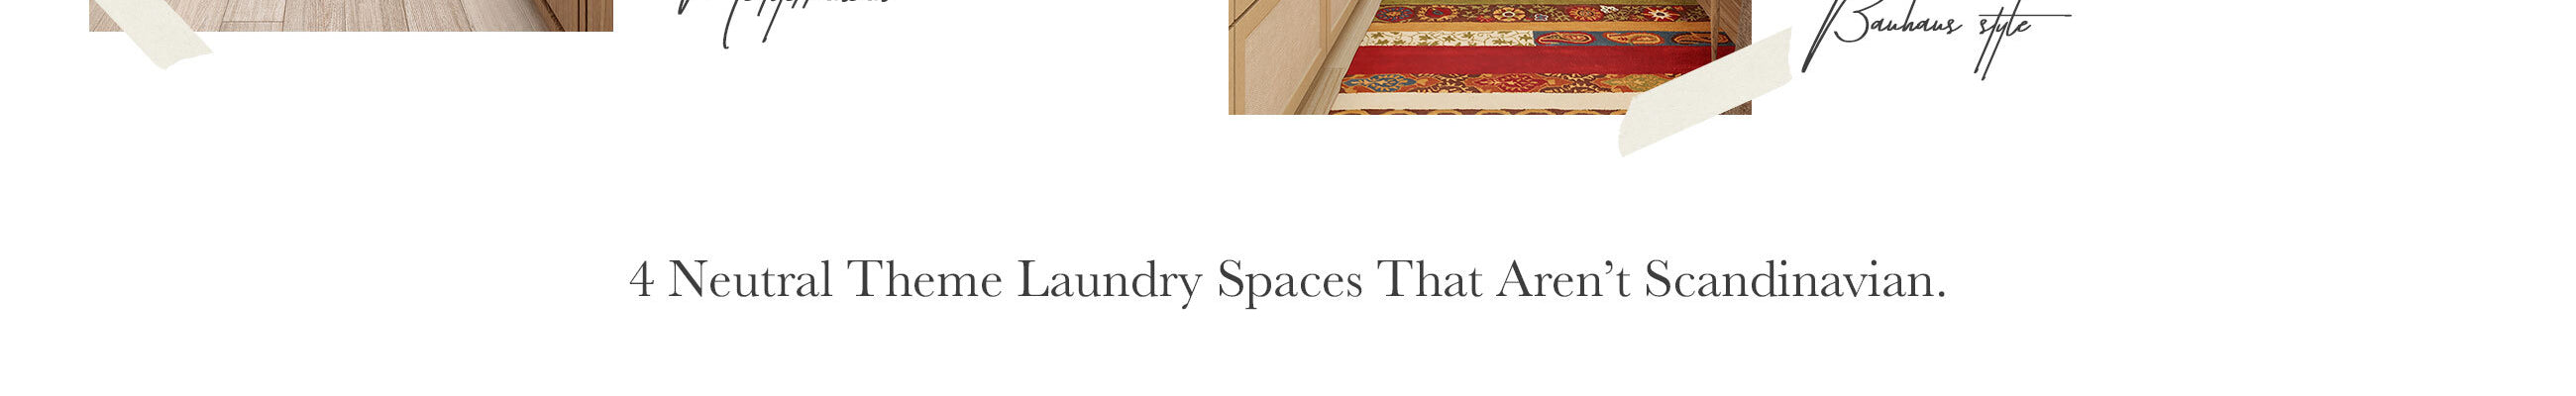 4 Neutral Theme Laundry spaces That Aren’t Scandinavian